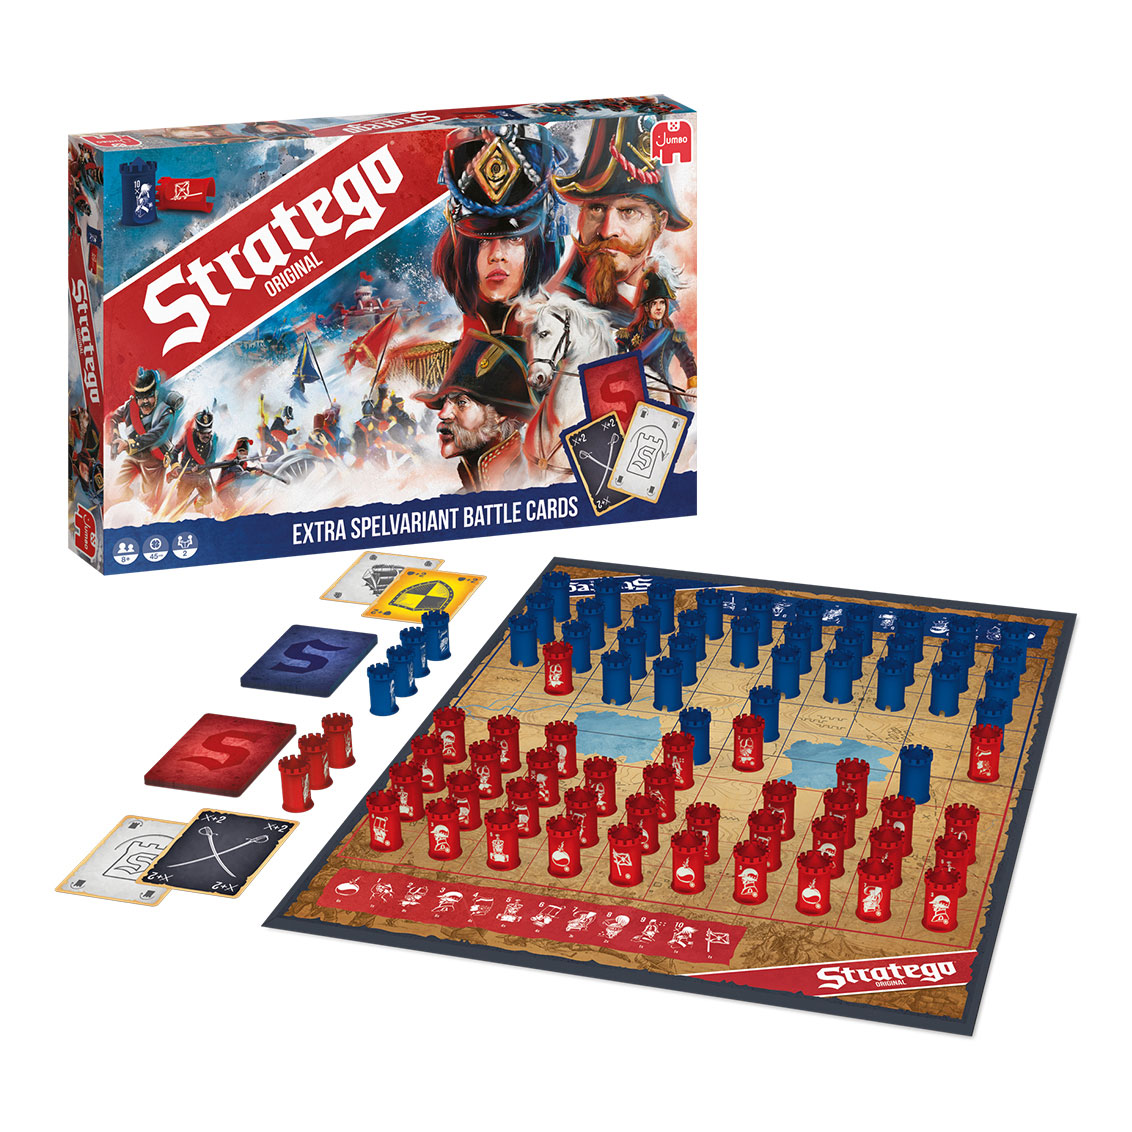 Stratego Original Board Game